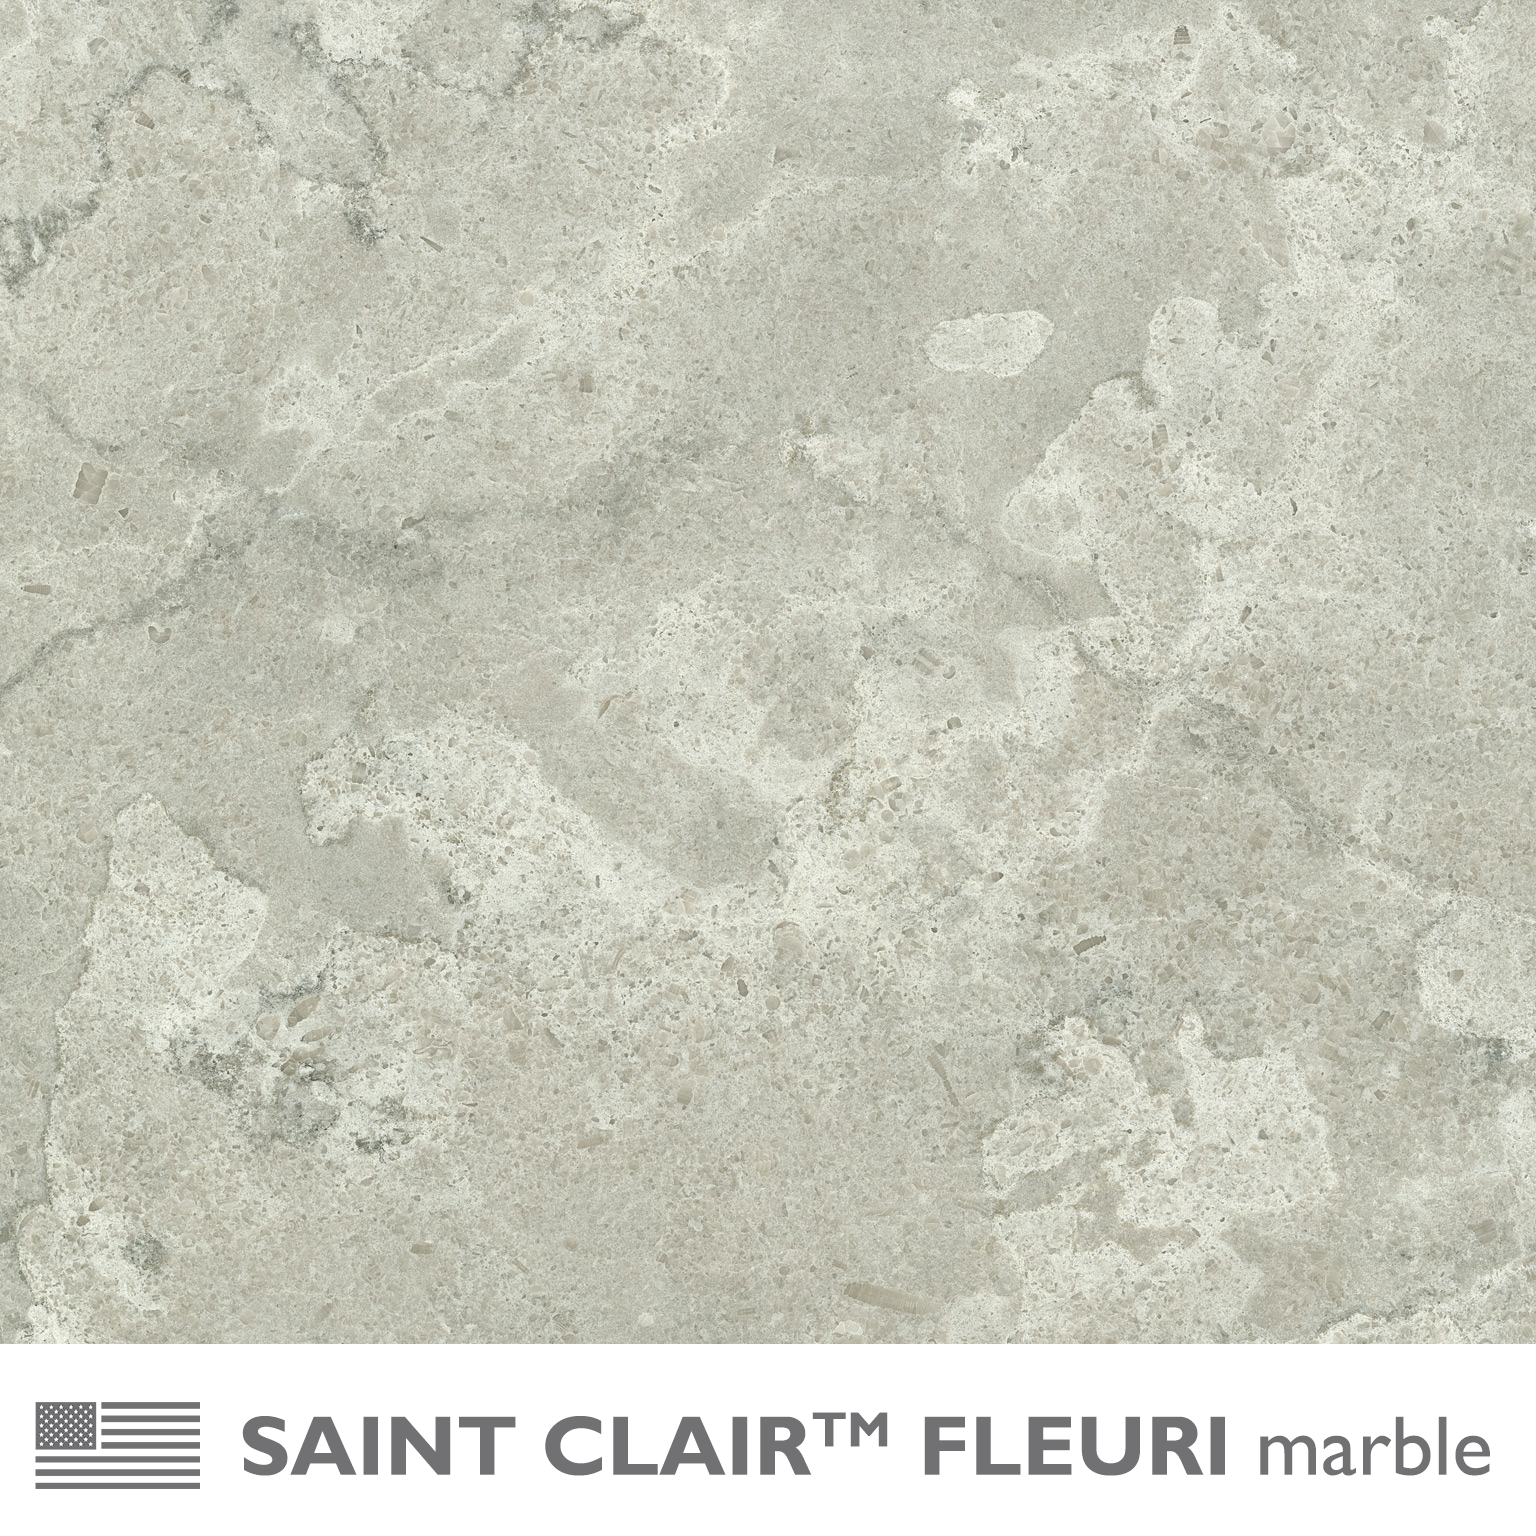 st-clair-fleuri-honed-stones-polycor